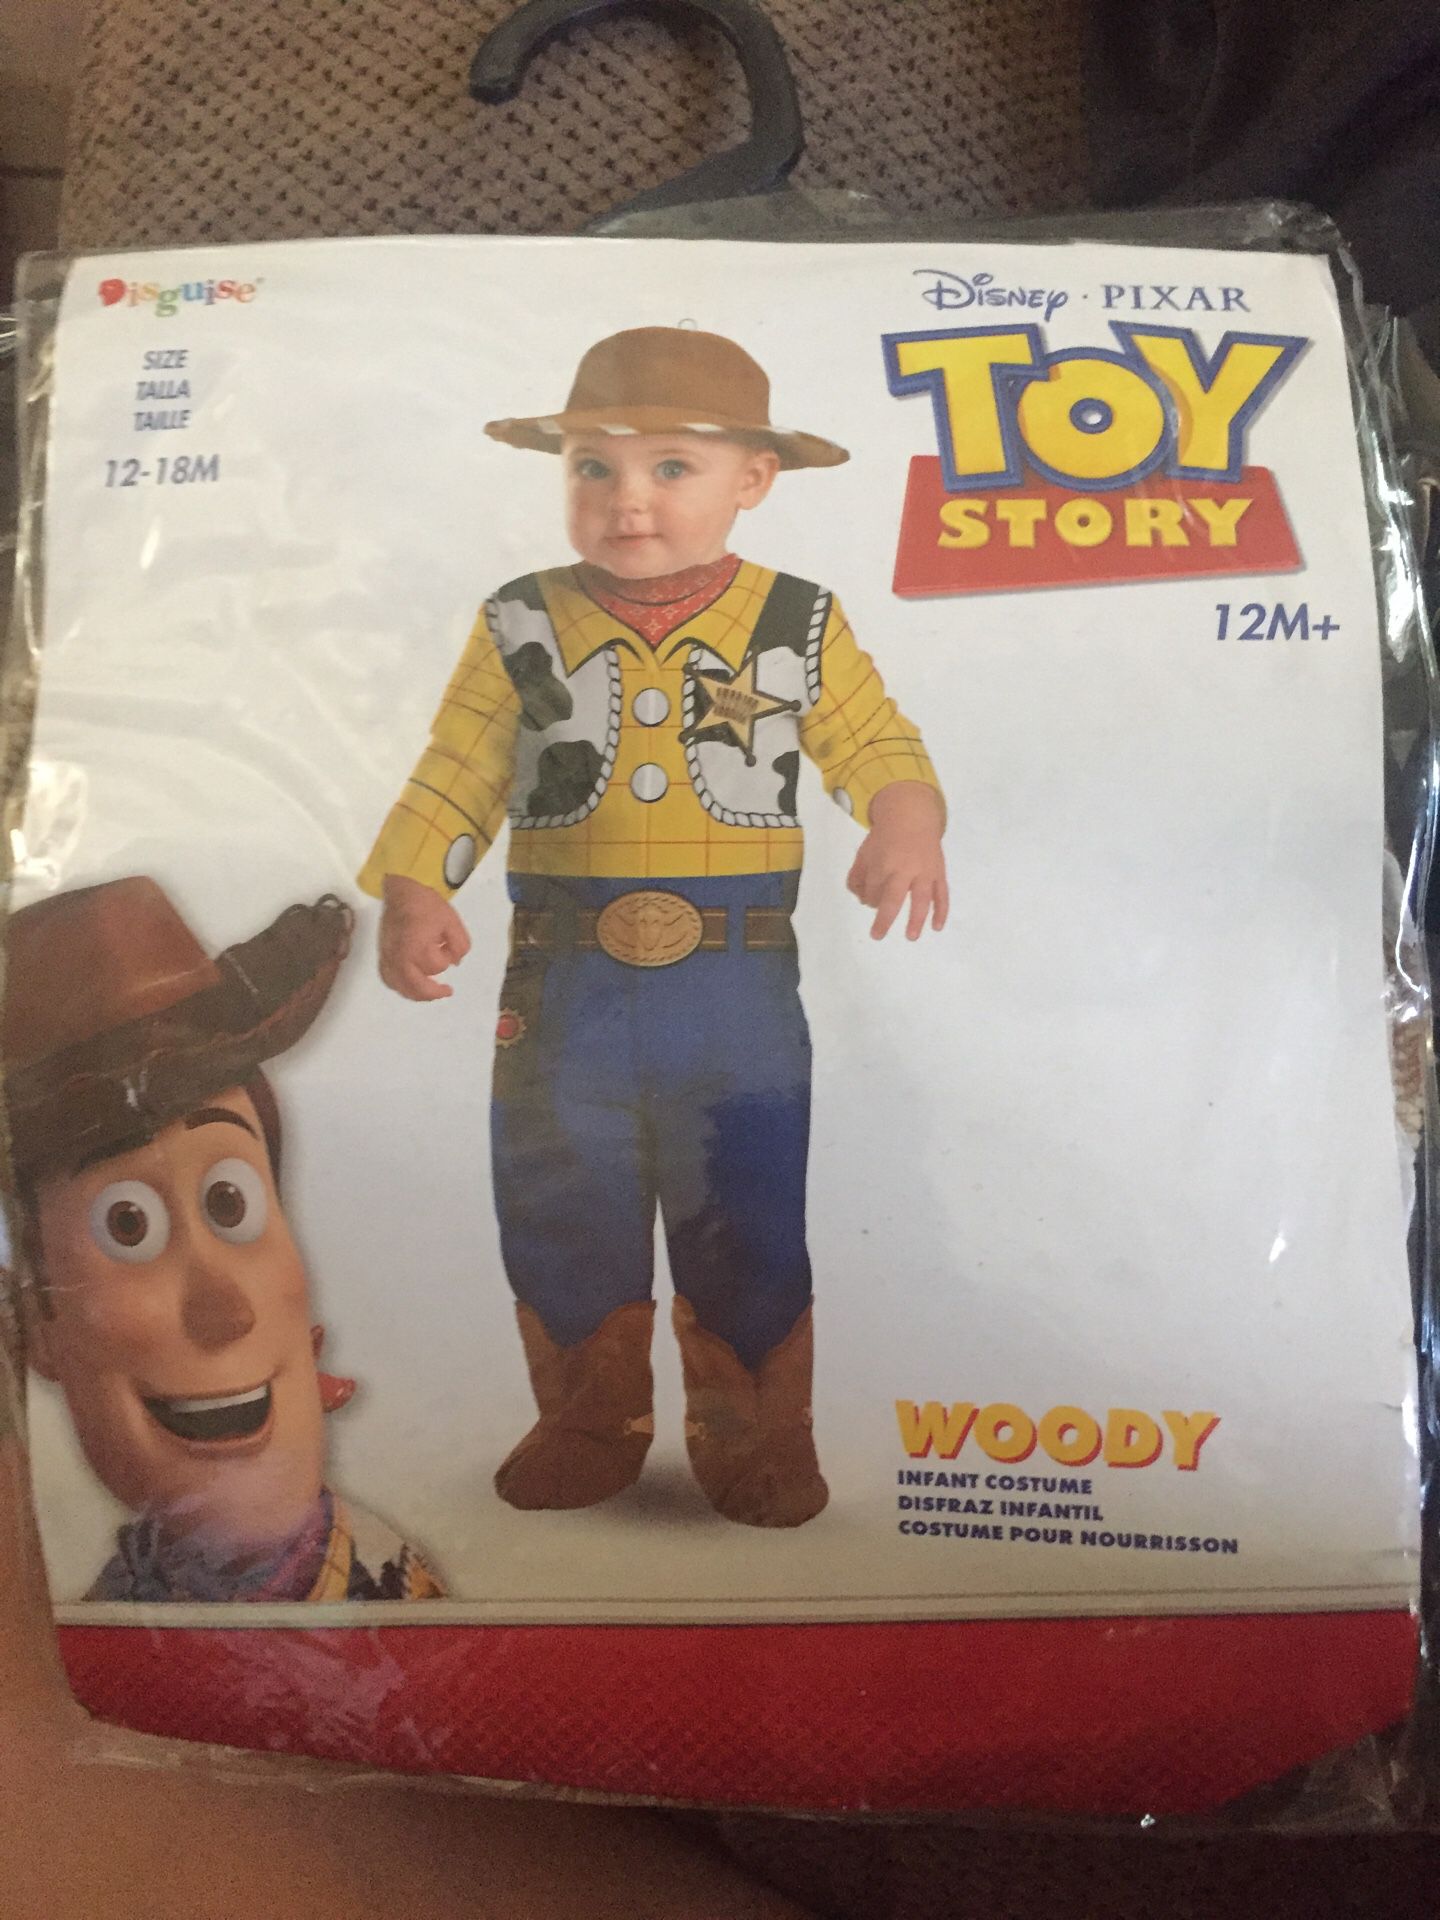 Woody infant costume